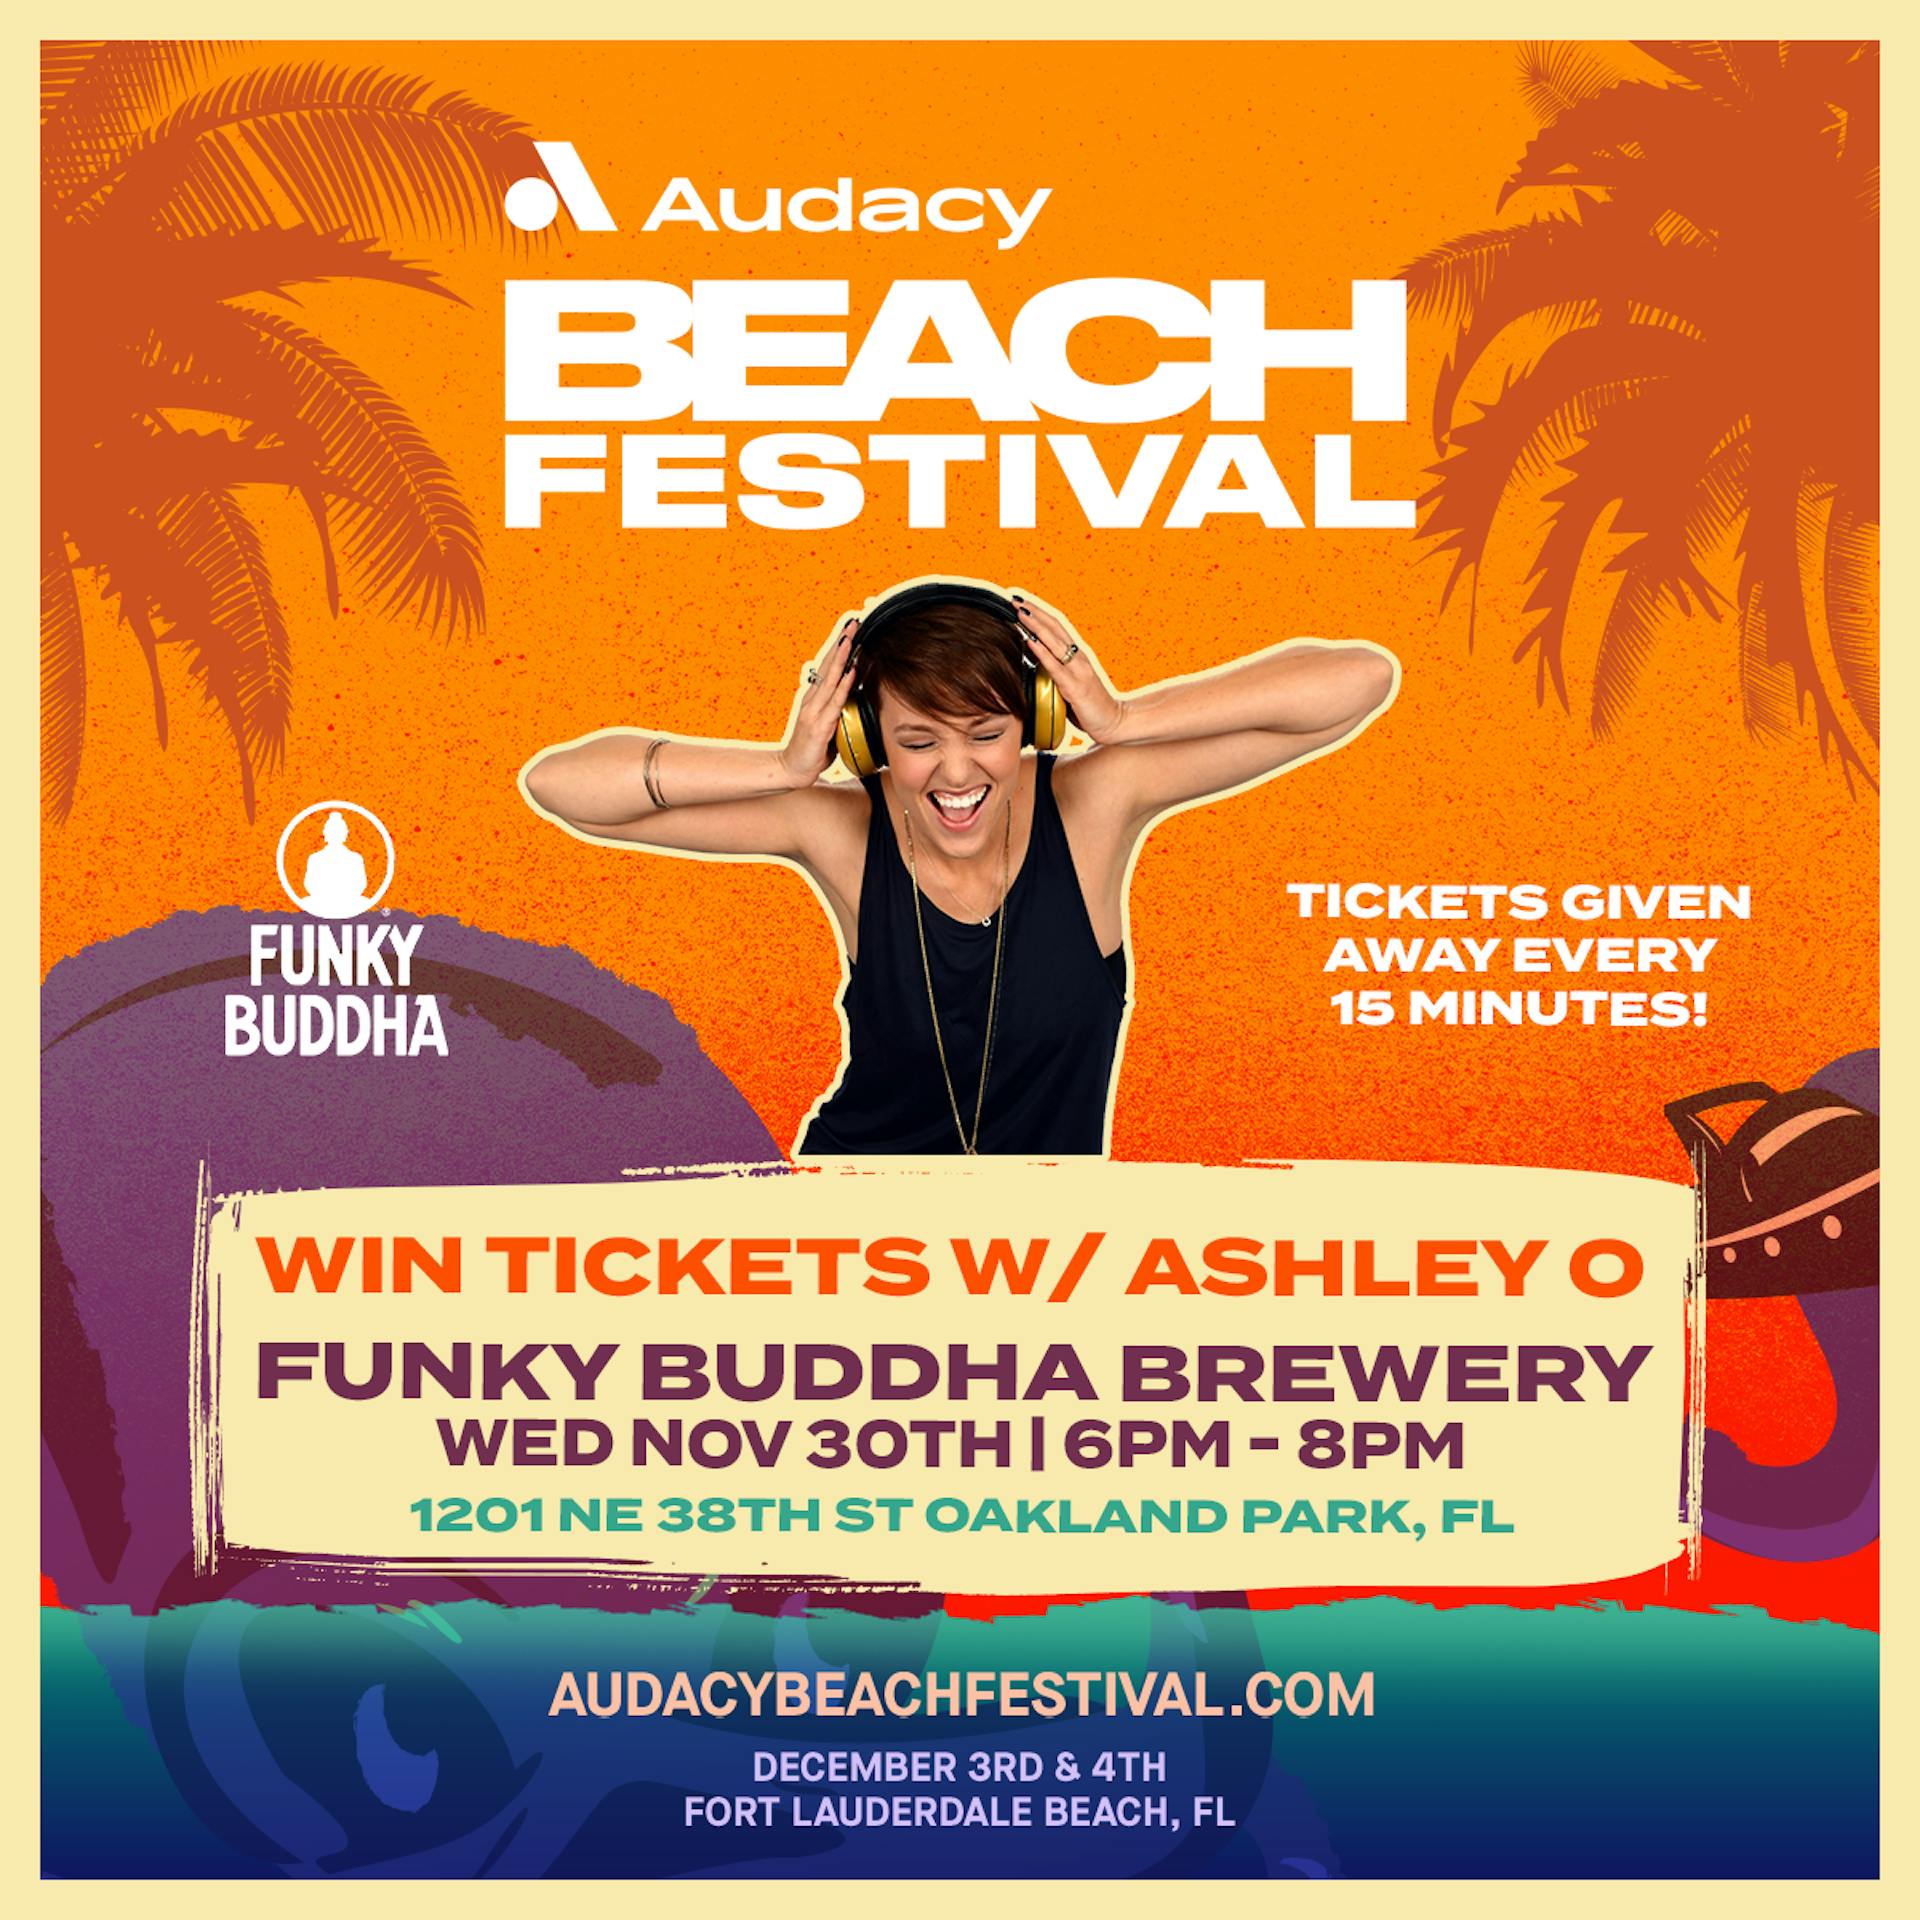 Audacy Beach Fest Ticket Giveaway